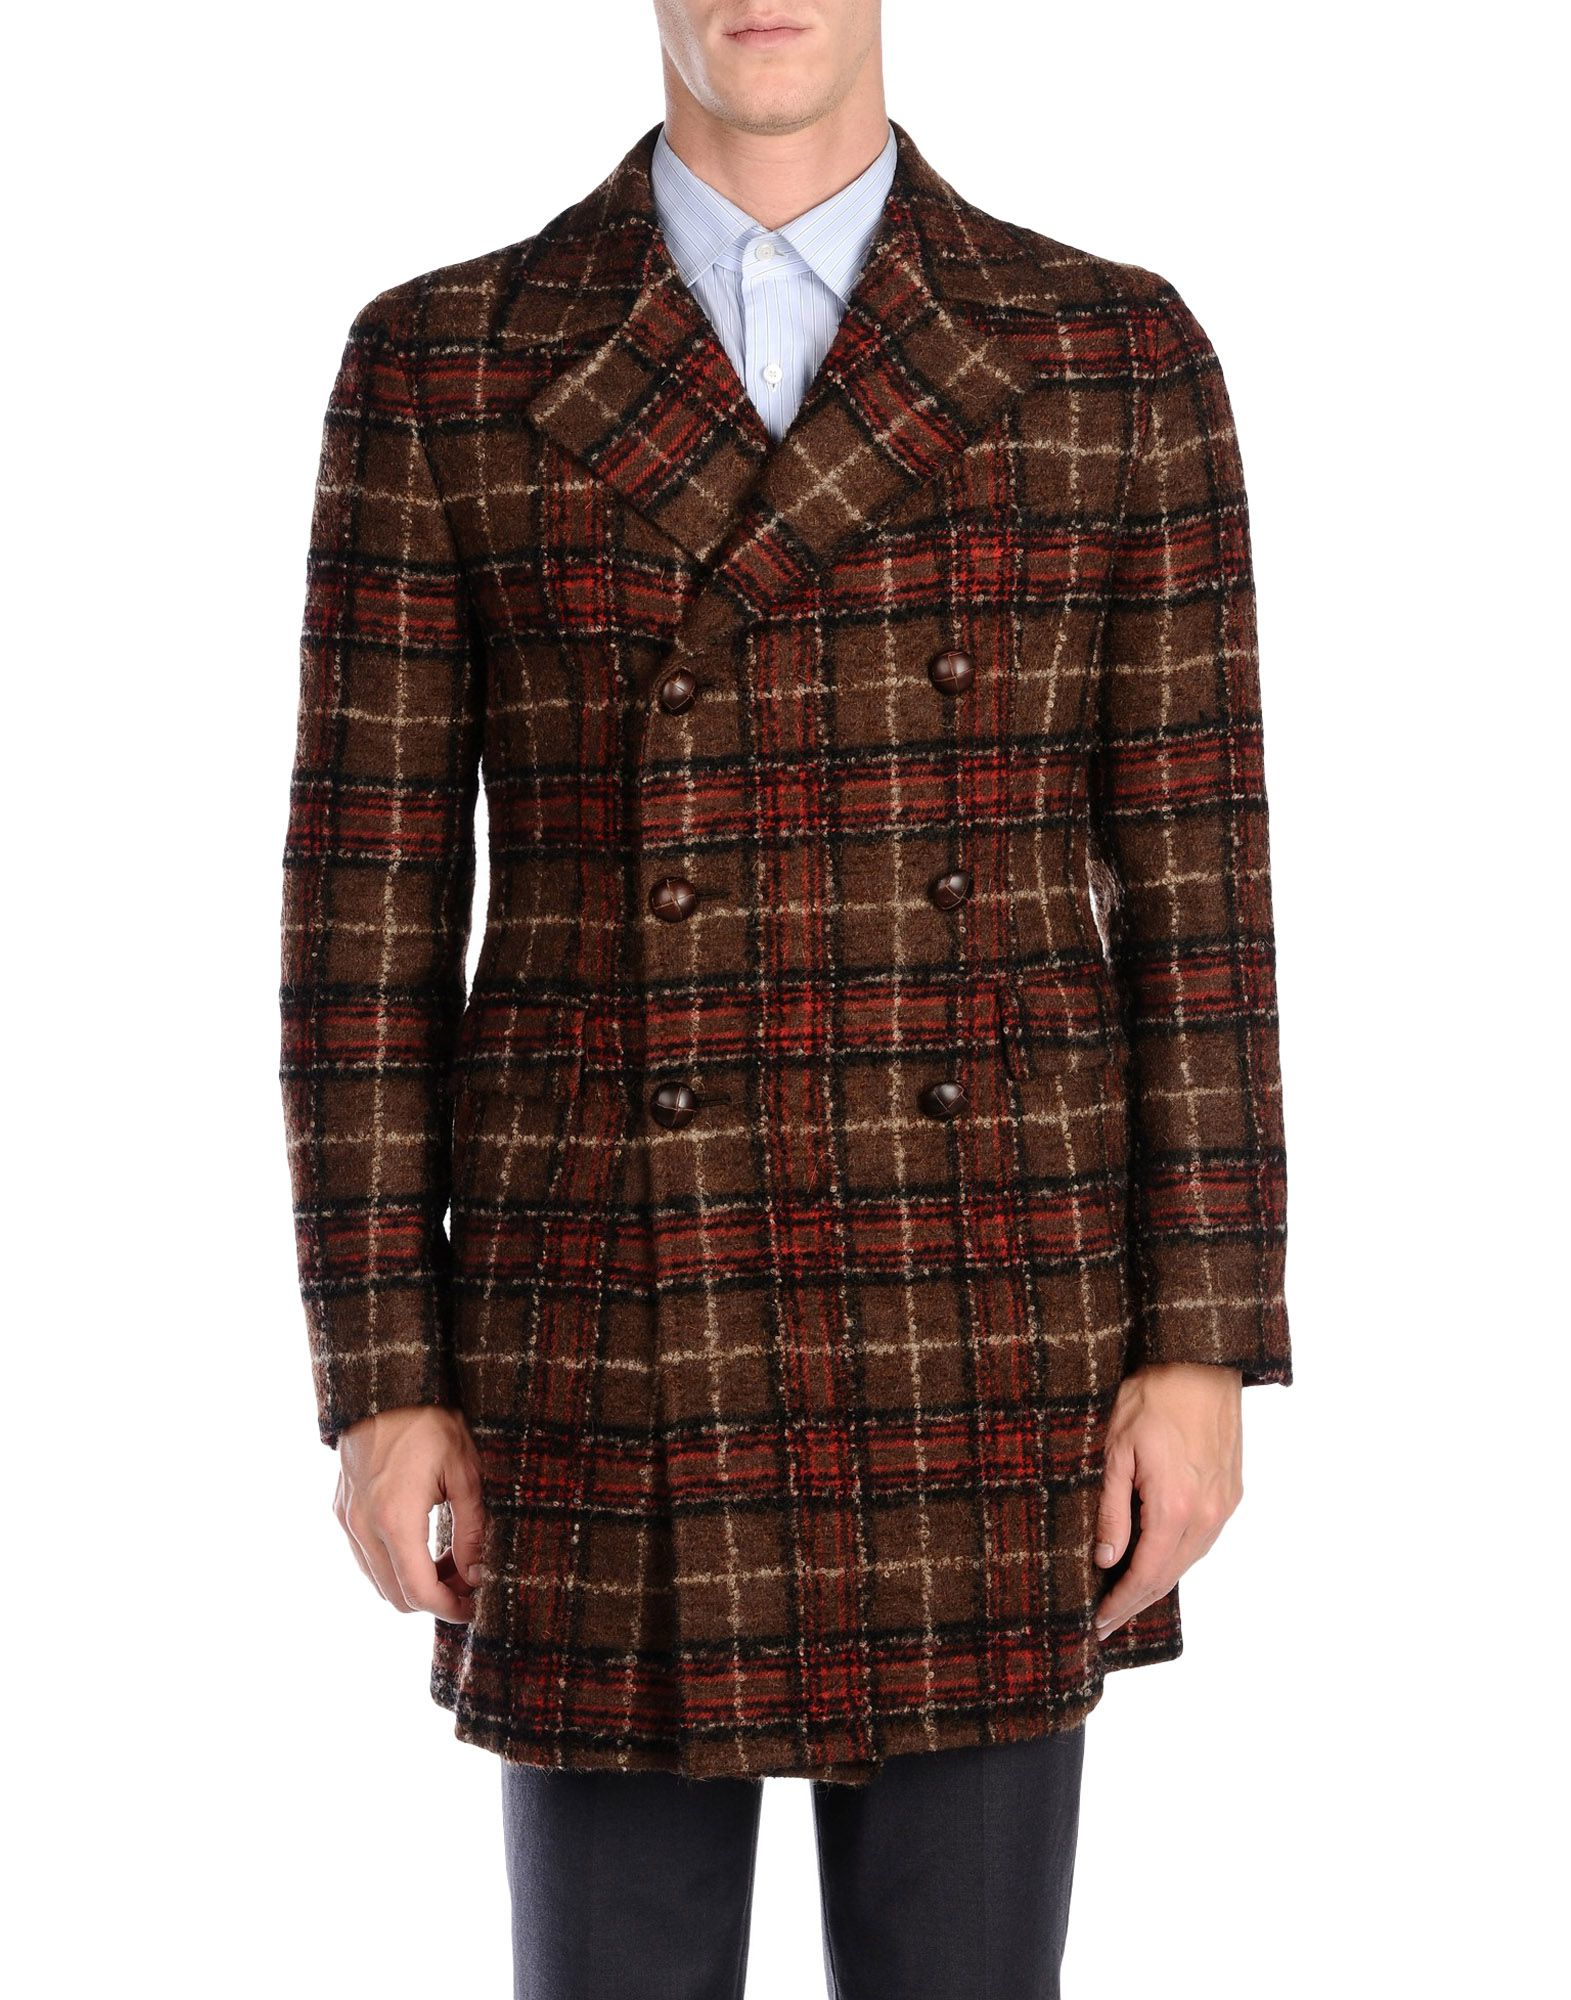 Lyst - Tagliatore Checked Coat in Brown for Men